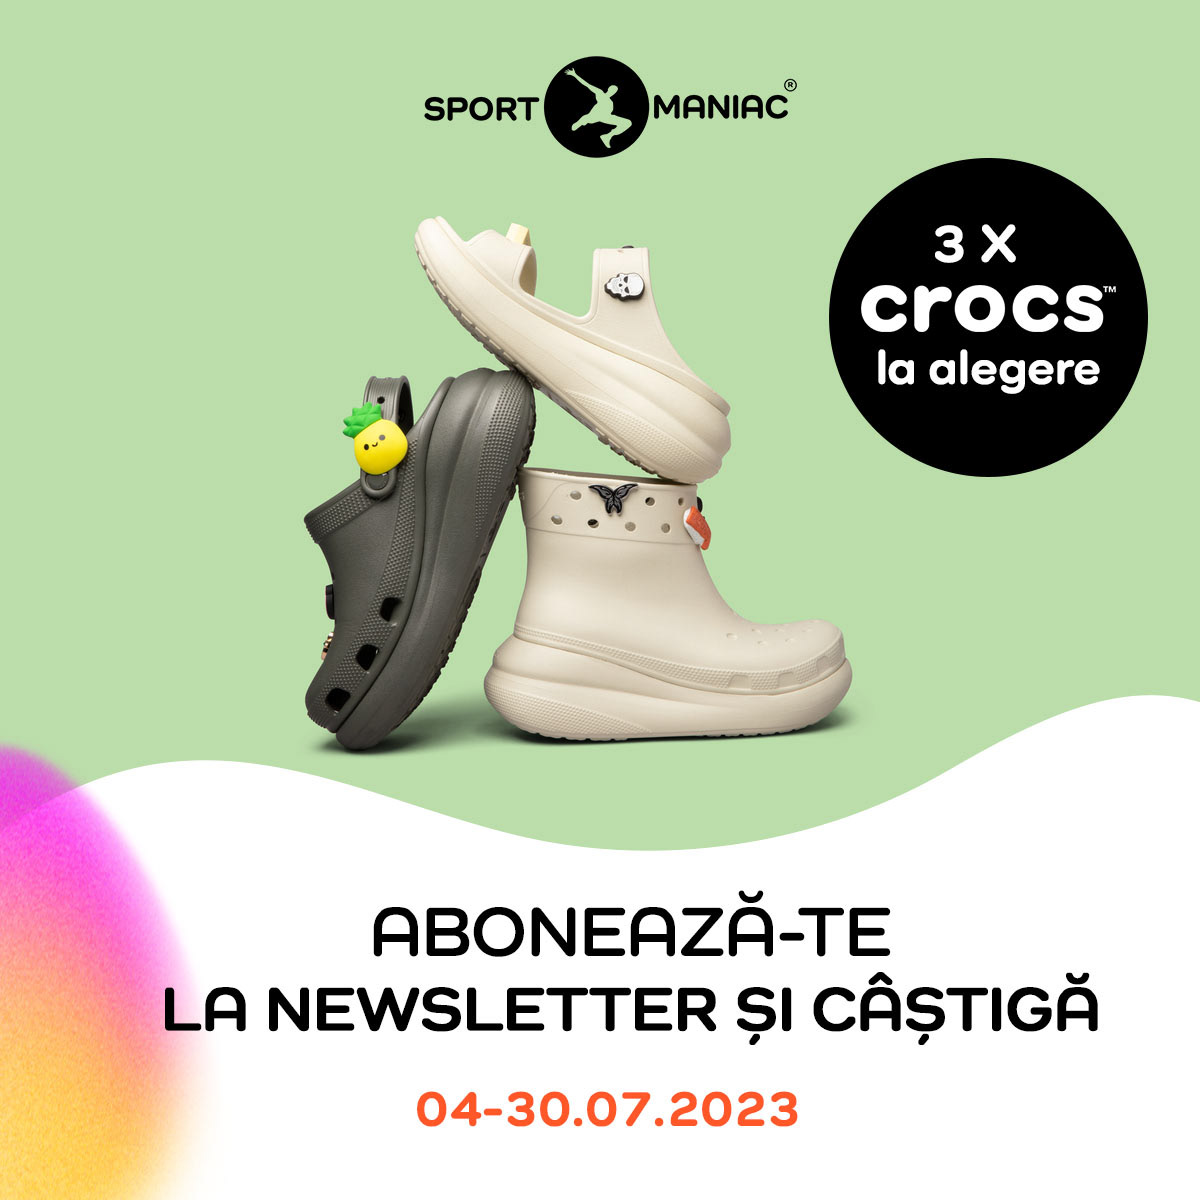 design Socialmedia banner google ads Crocs Shoes sport lifestyle